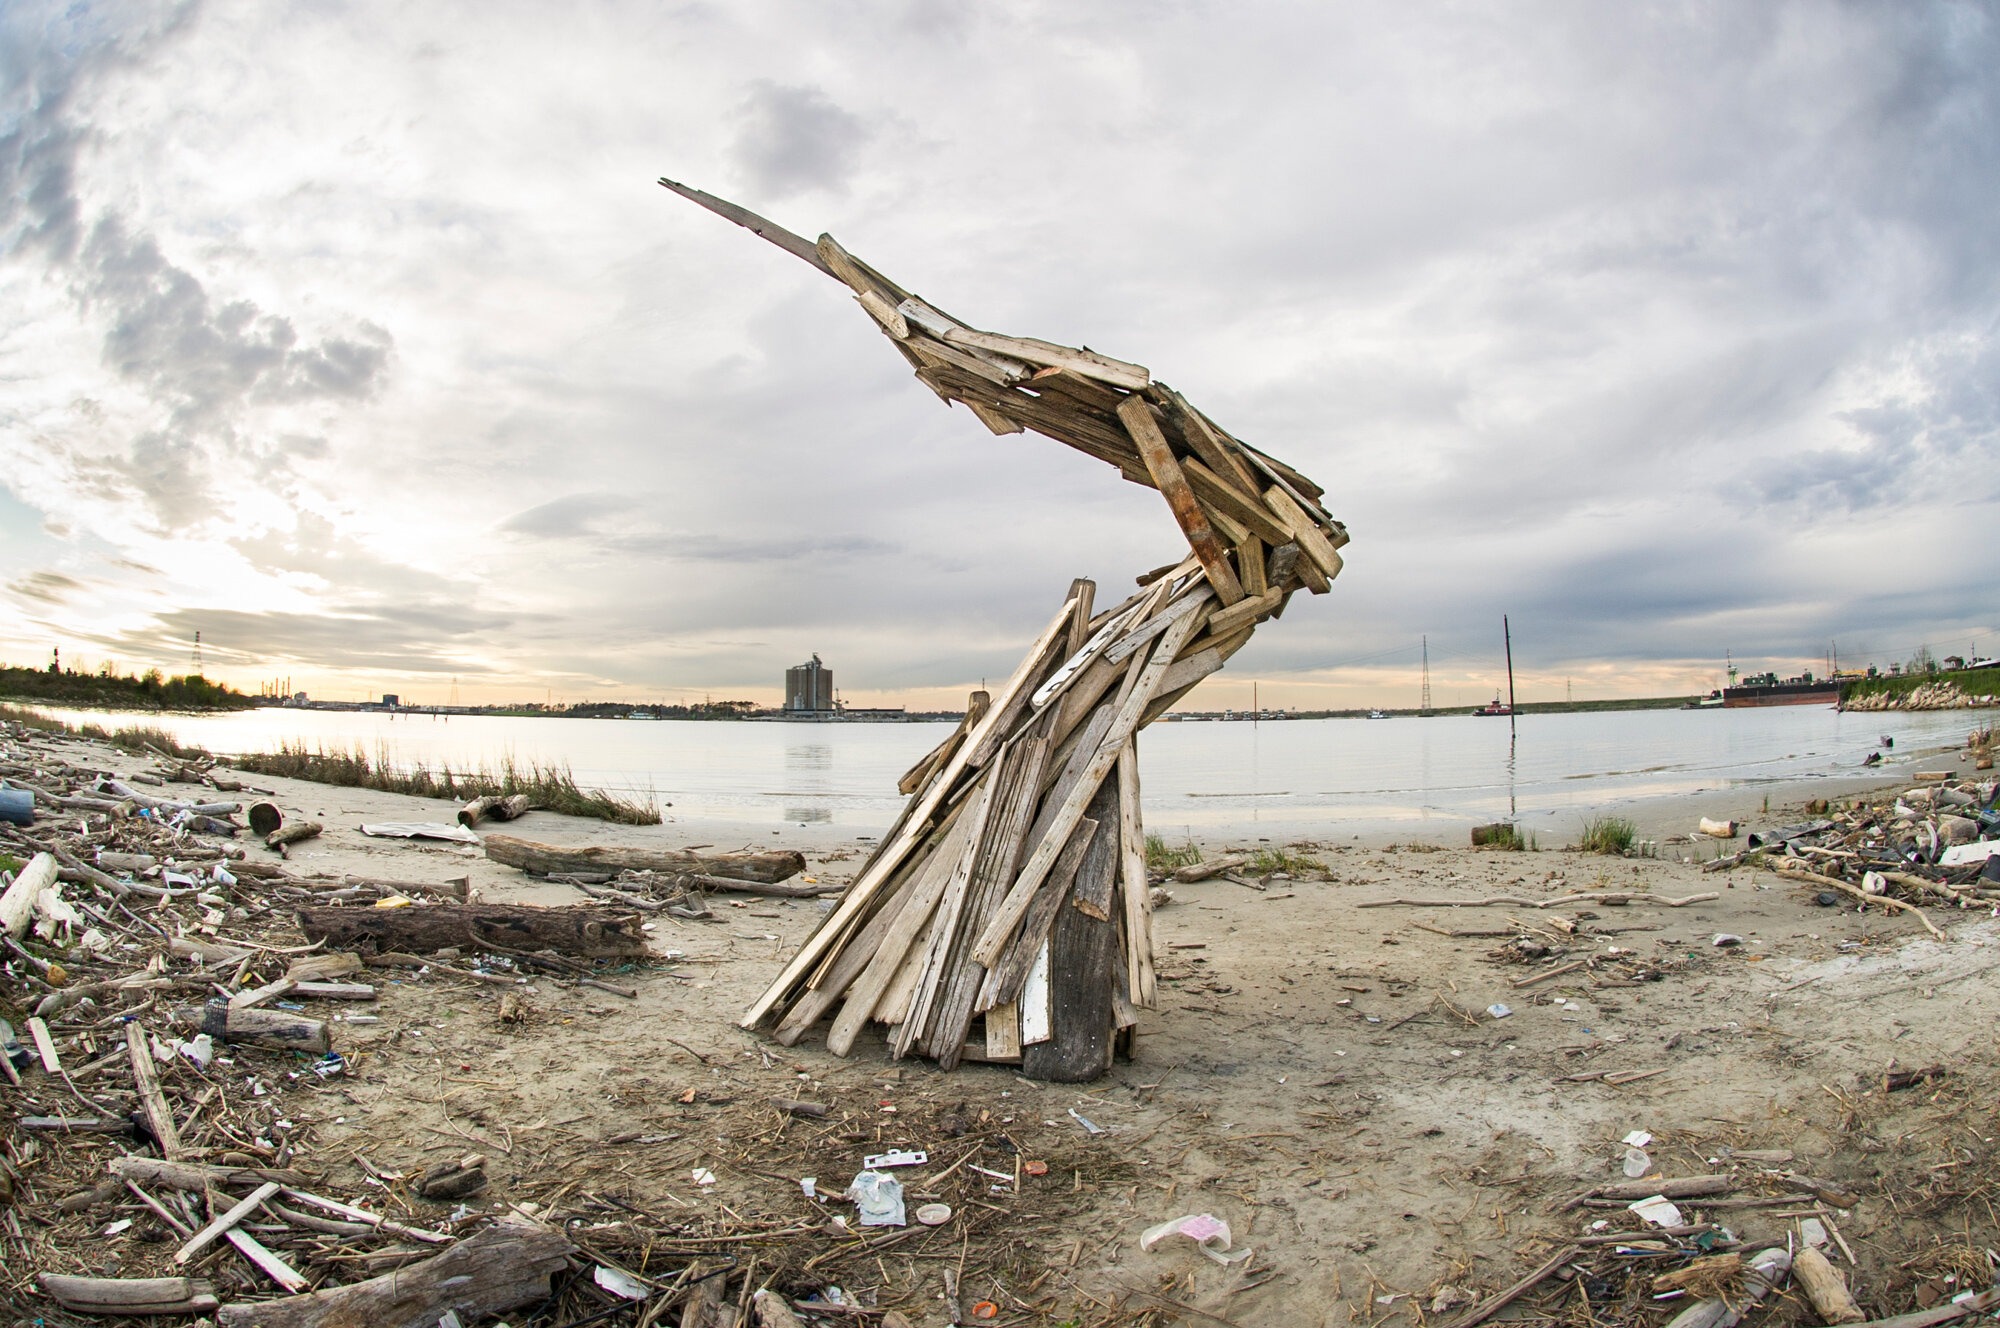  JEREMY UNDERWOOD,  Wood Debris Spiral,  2016. 18x24”. Photography. $800. 